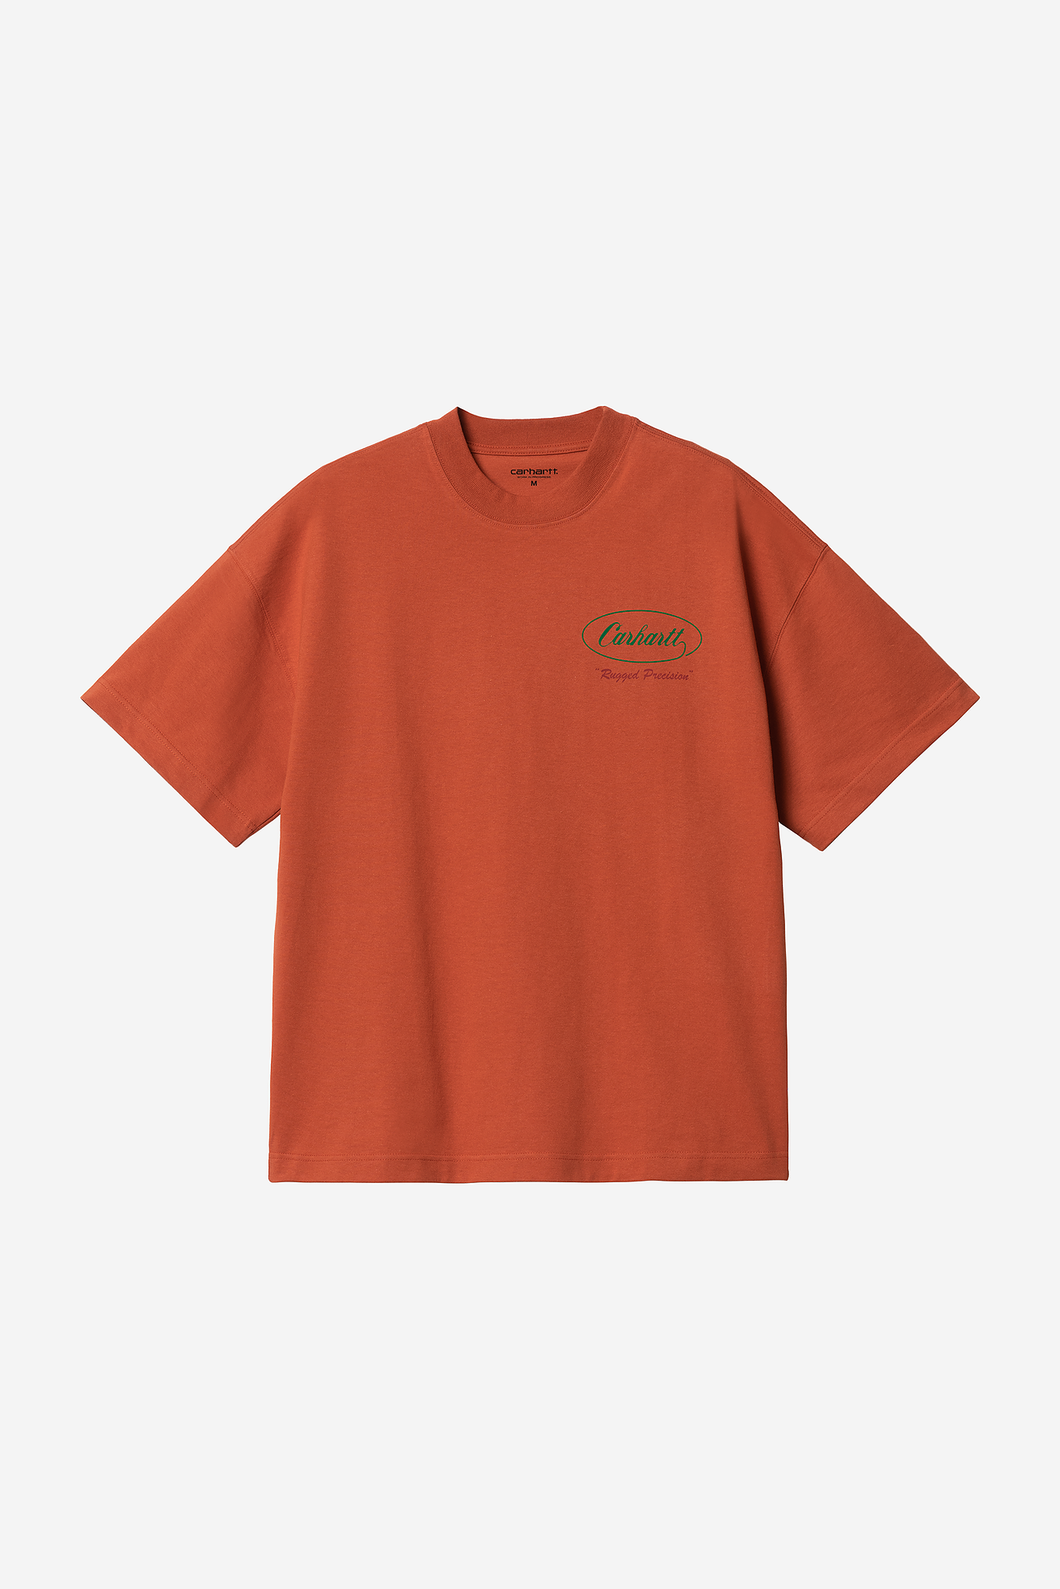 Carhartt WIP S/S Trophy T-Shirt Brick